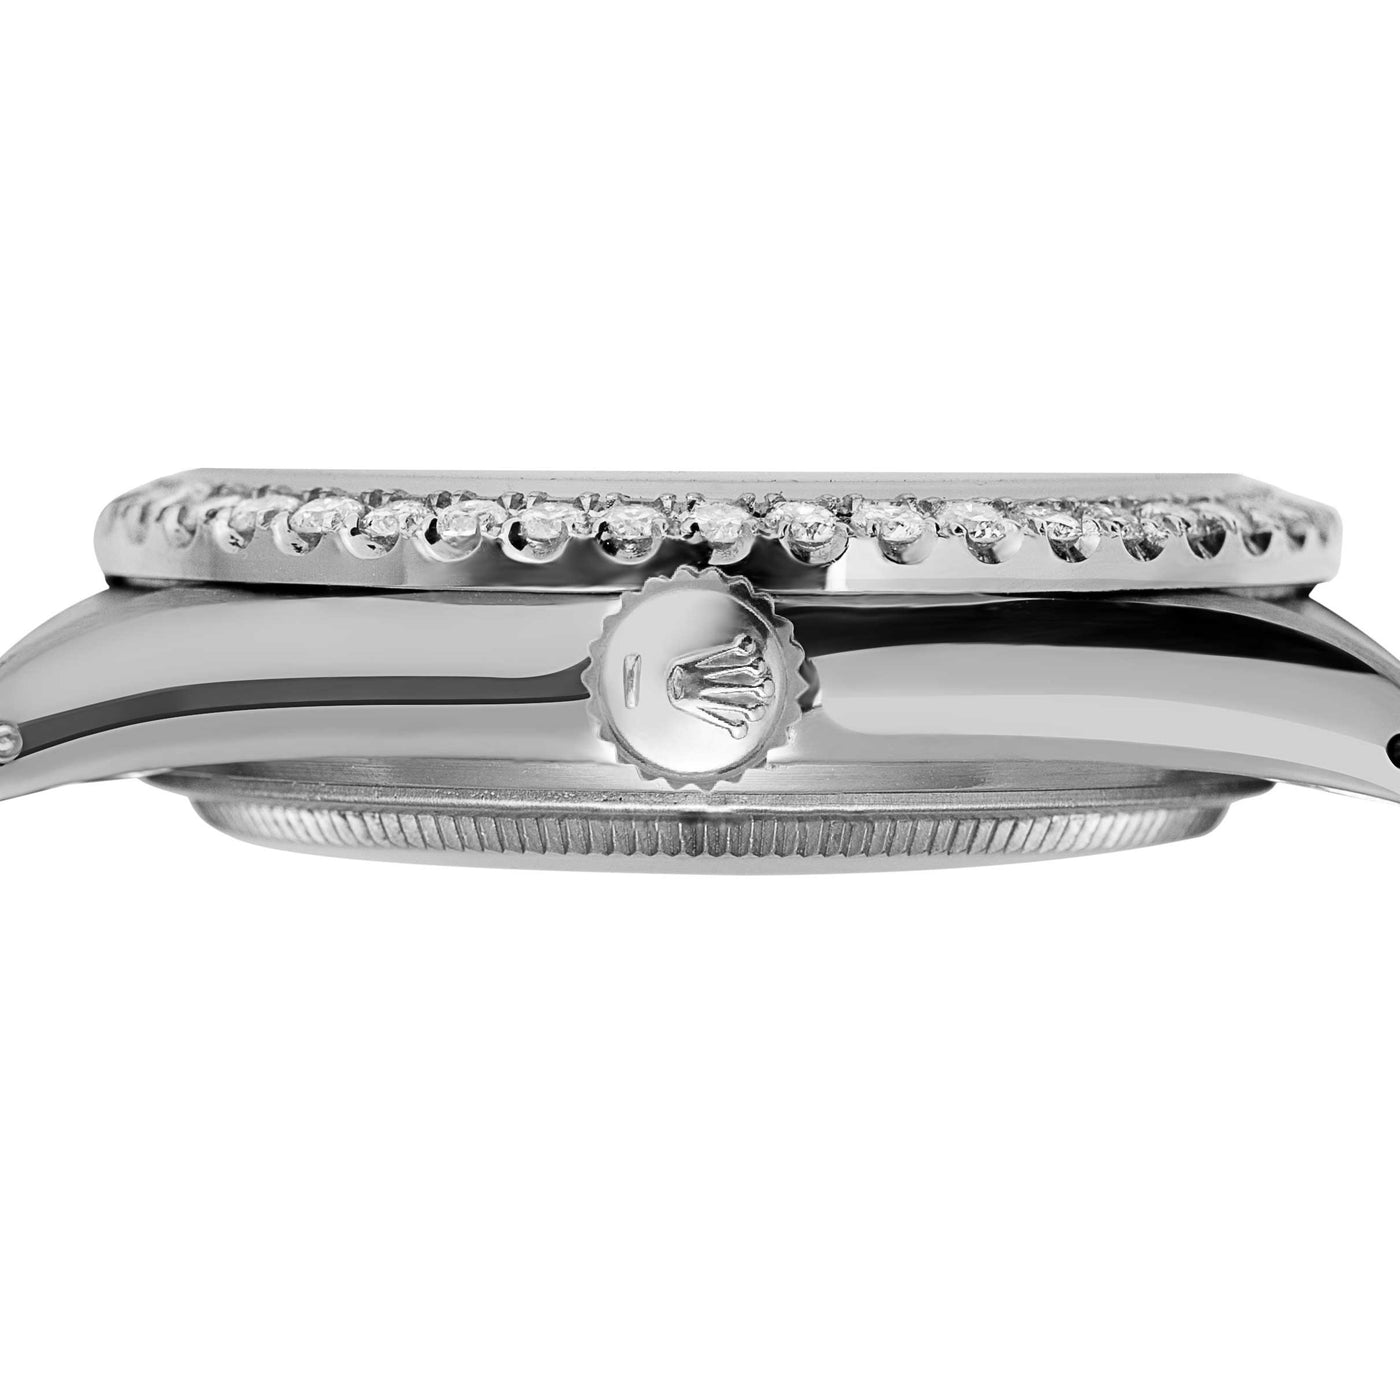 Women Rolex Datejust Diamond Bezel Watch 26mm Mother of Pearl Dial | 1.35ct